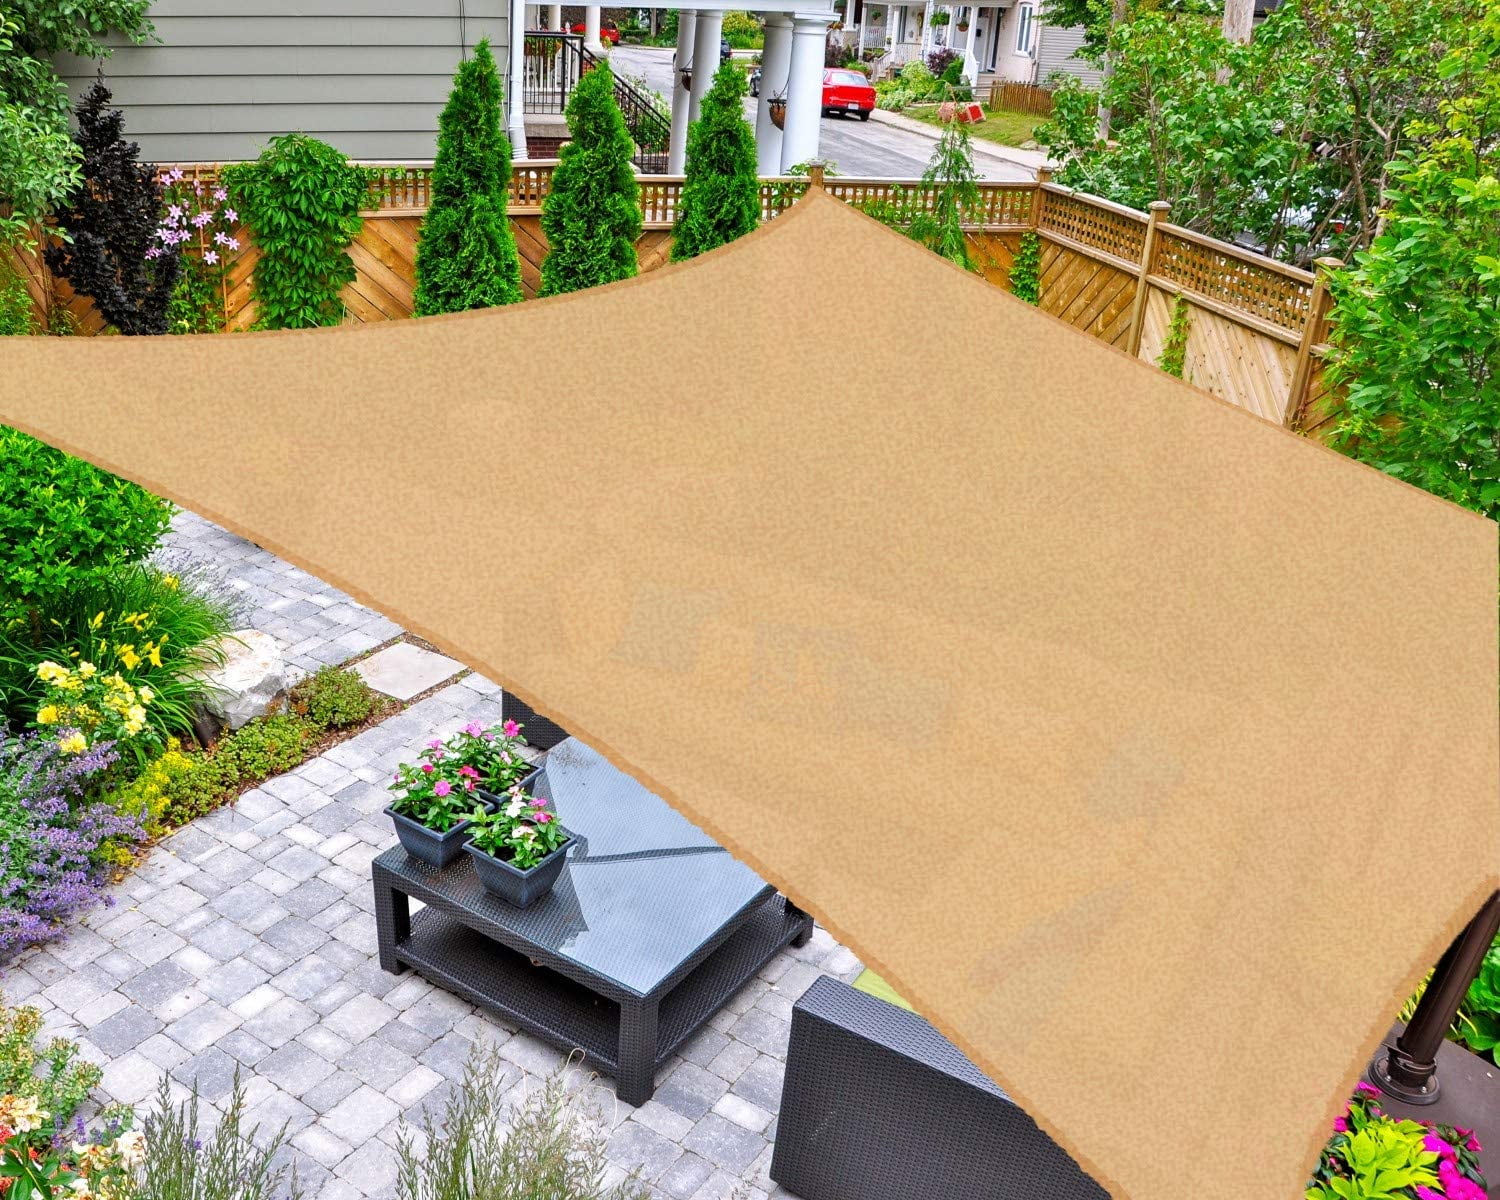 Gray, 10'X10' Outdoor Waterproof Sun Shade Sail Canopy Rectangle UV Block for Patio and Garden,Backyard Lawn